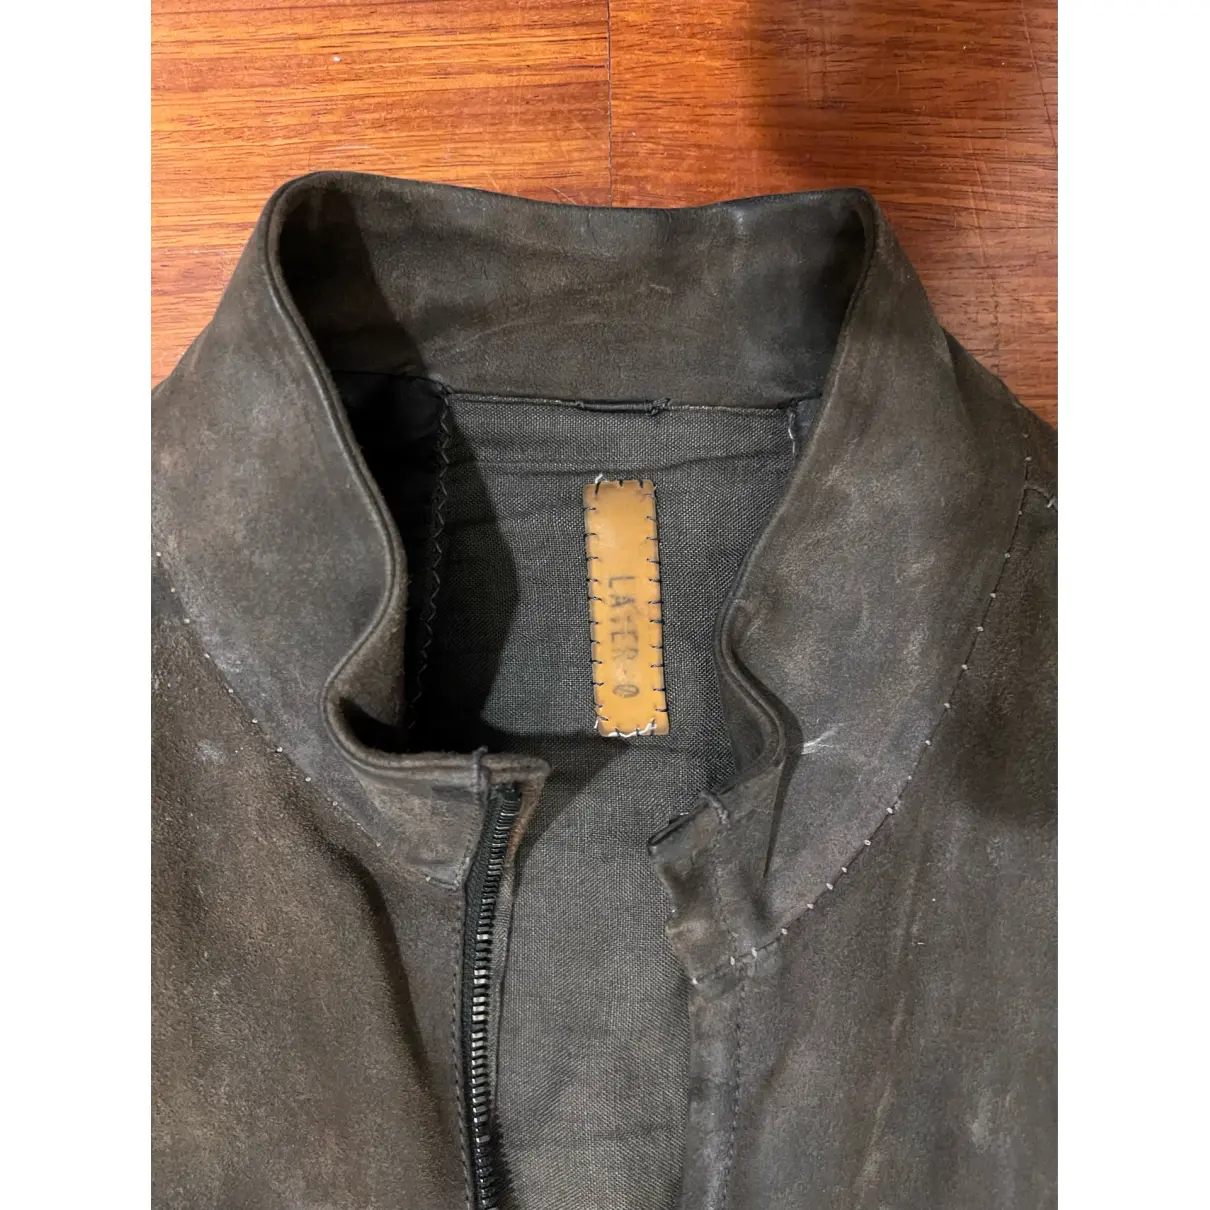 Leather vest Layer-0